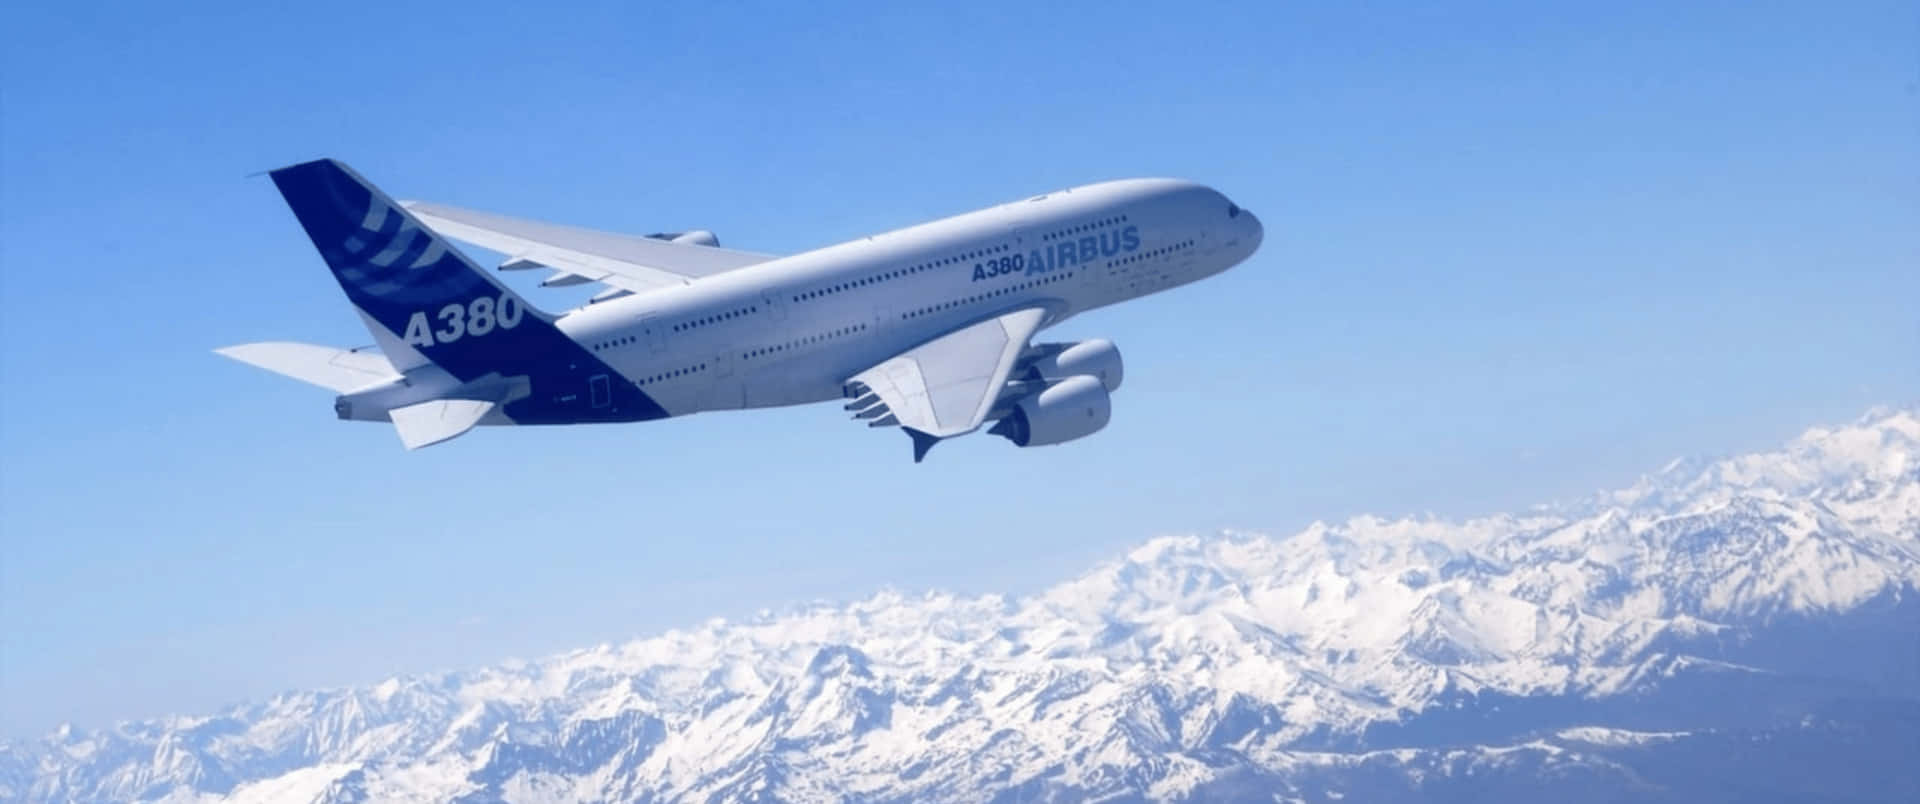 3440x1440pflygplan Airbus A380 Vit Bakgrund